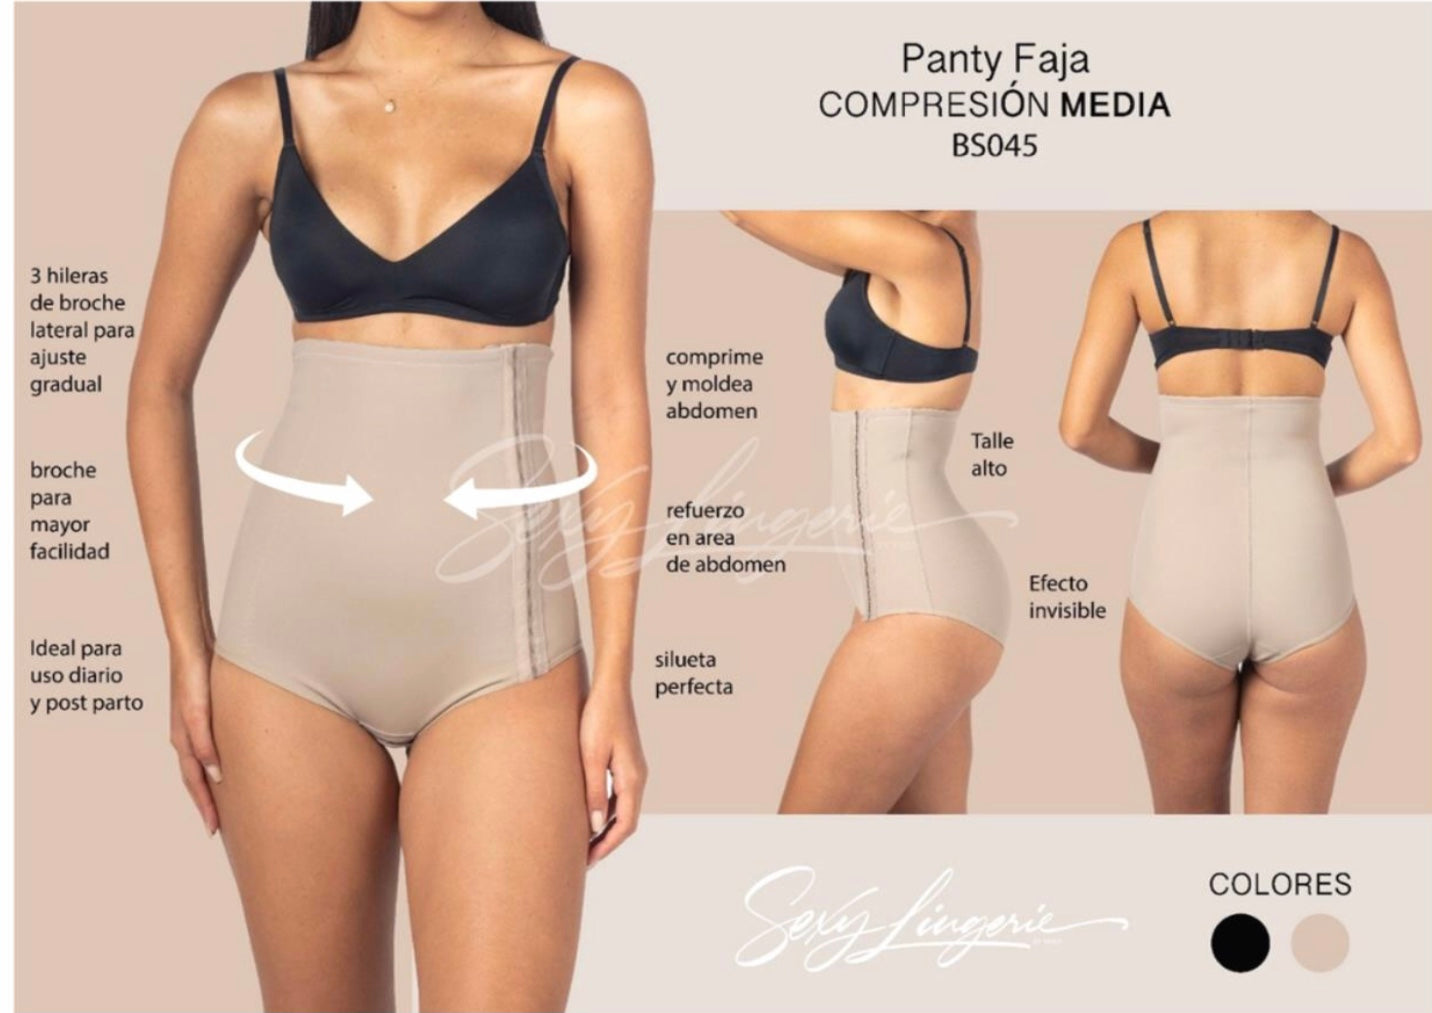 Columbian Faja Shapewear with Smart Compression/Shape Contouring Fabric